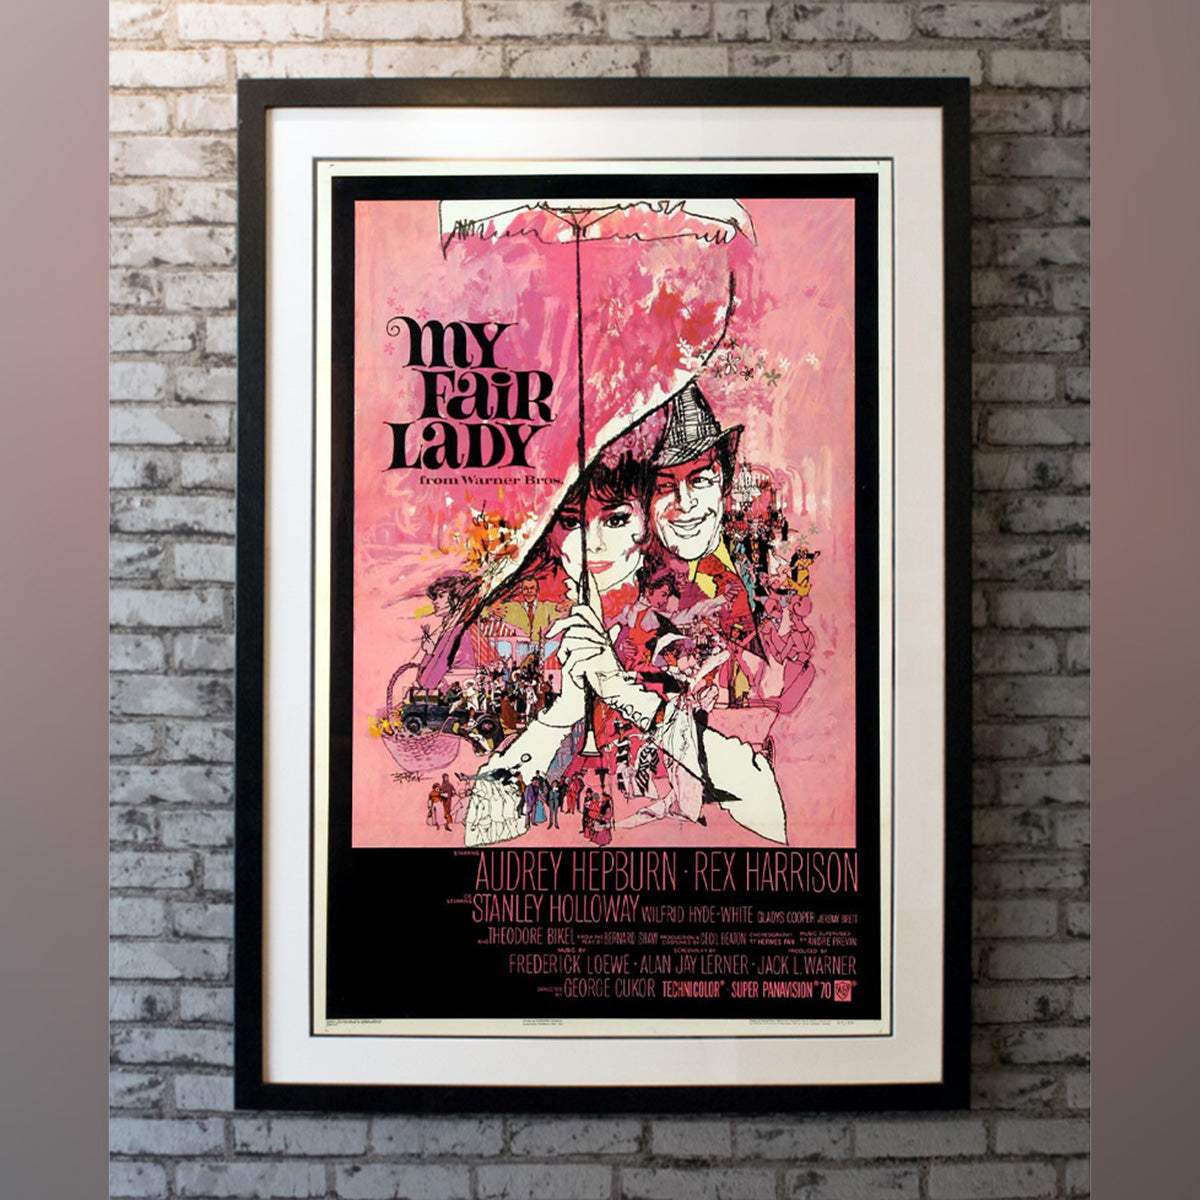 Original Movie Poster of My Fair Lady (1964)